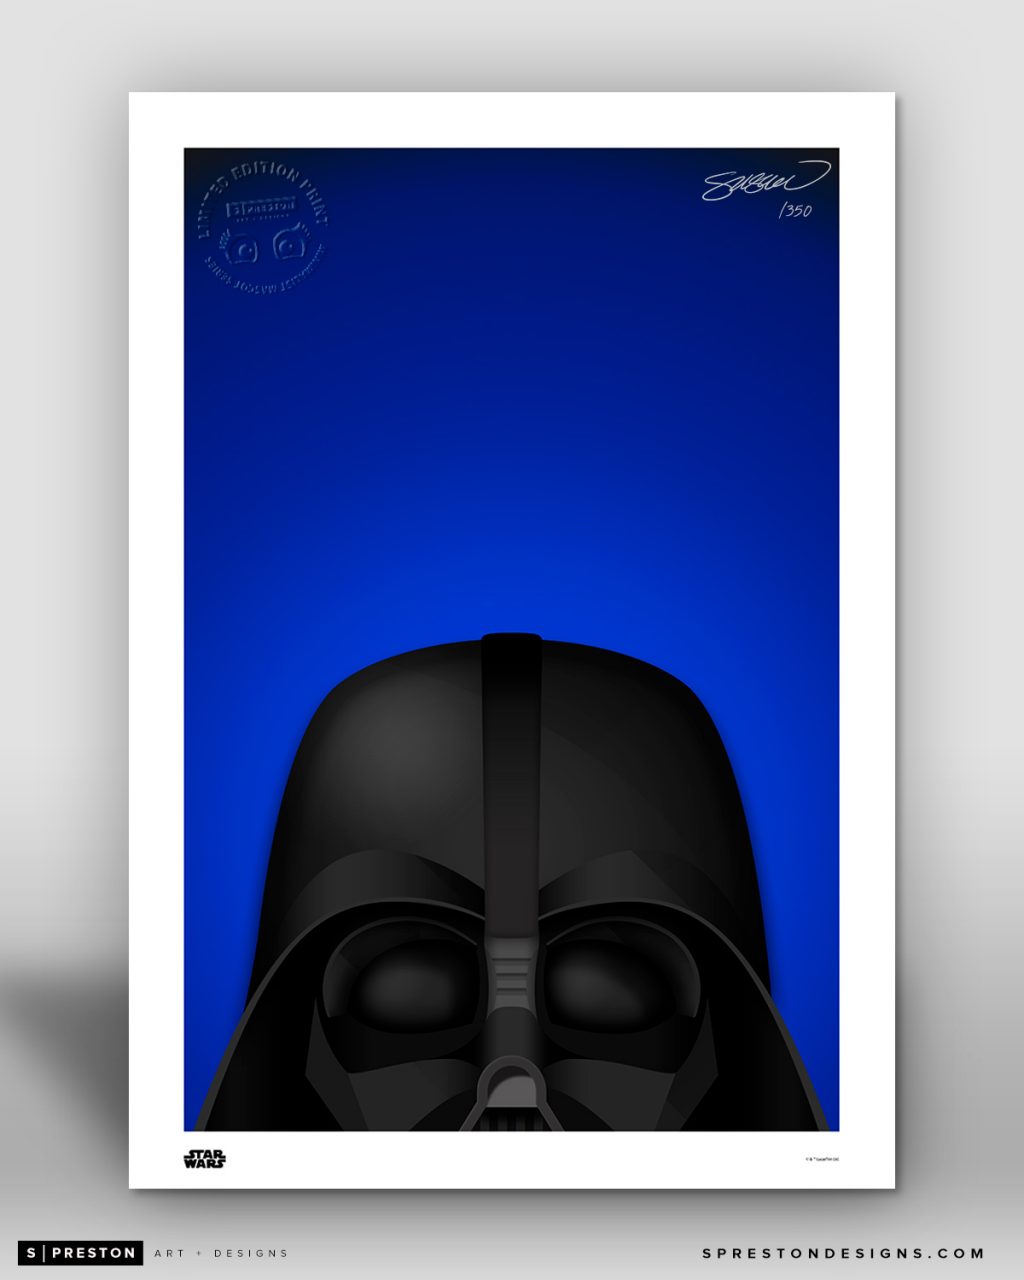 Darth Vader print (S.Preston)